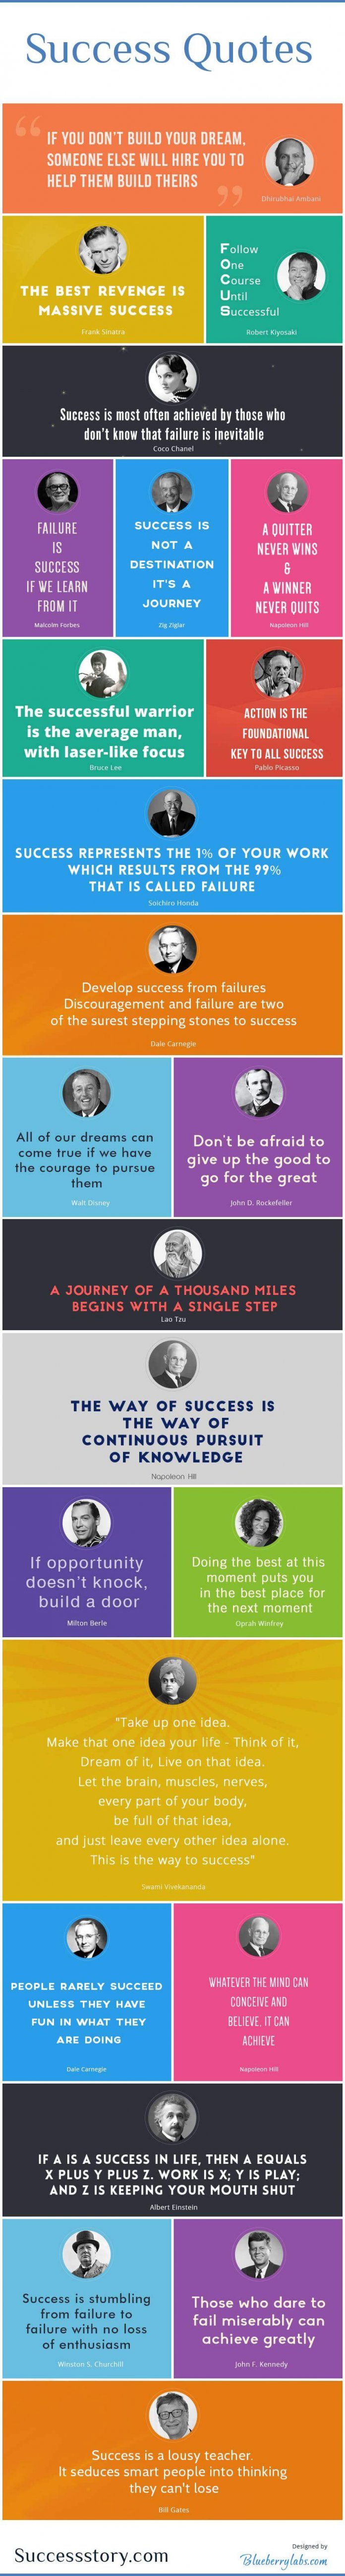 inspirational success quotes